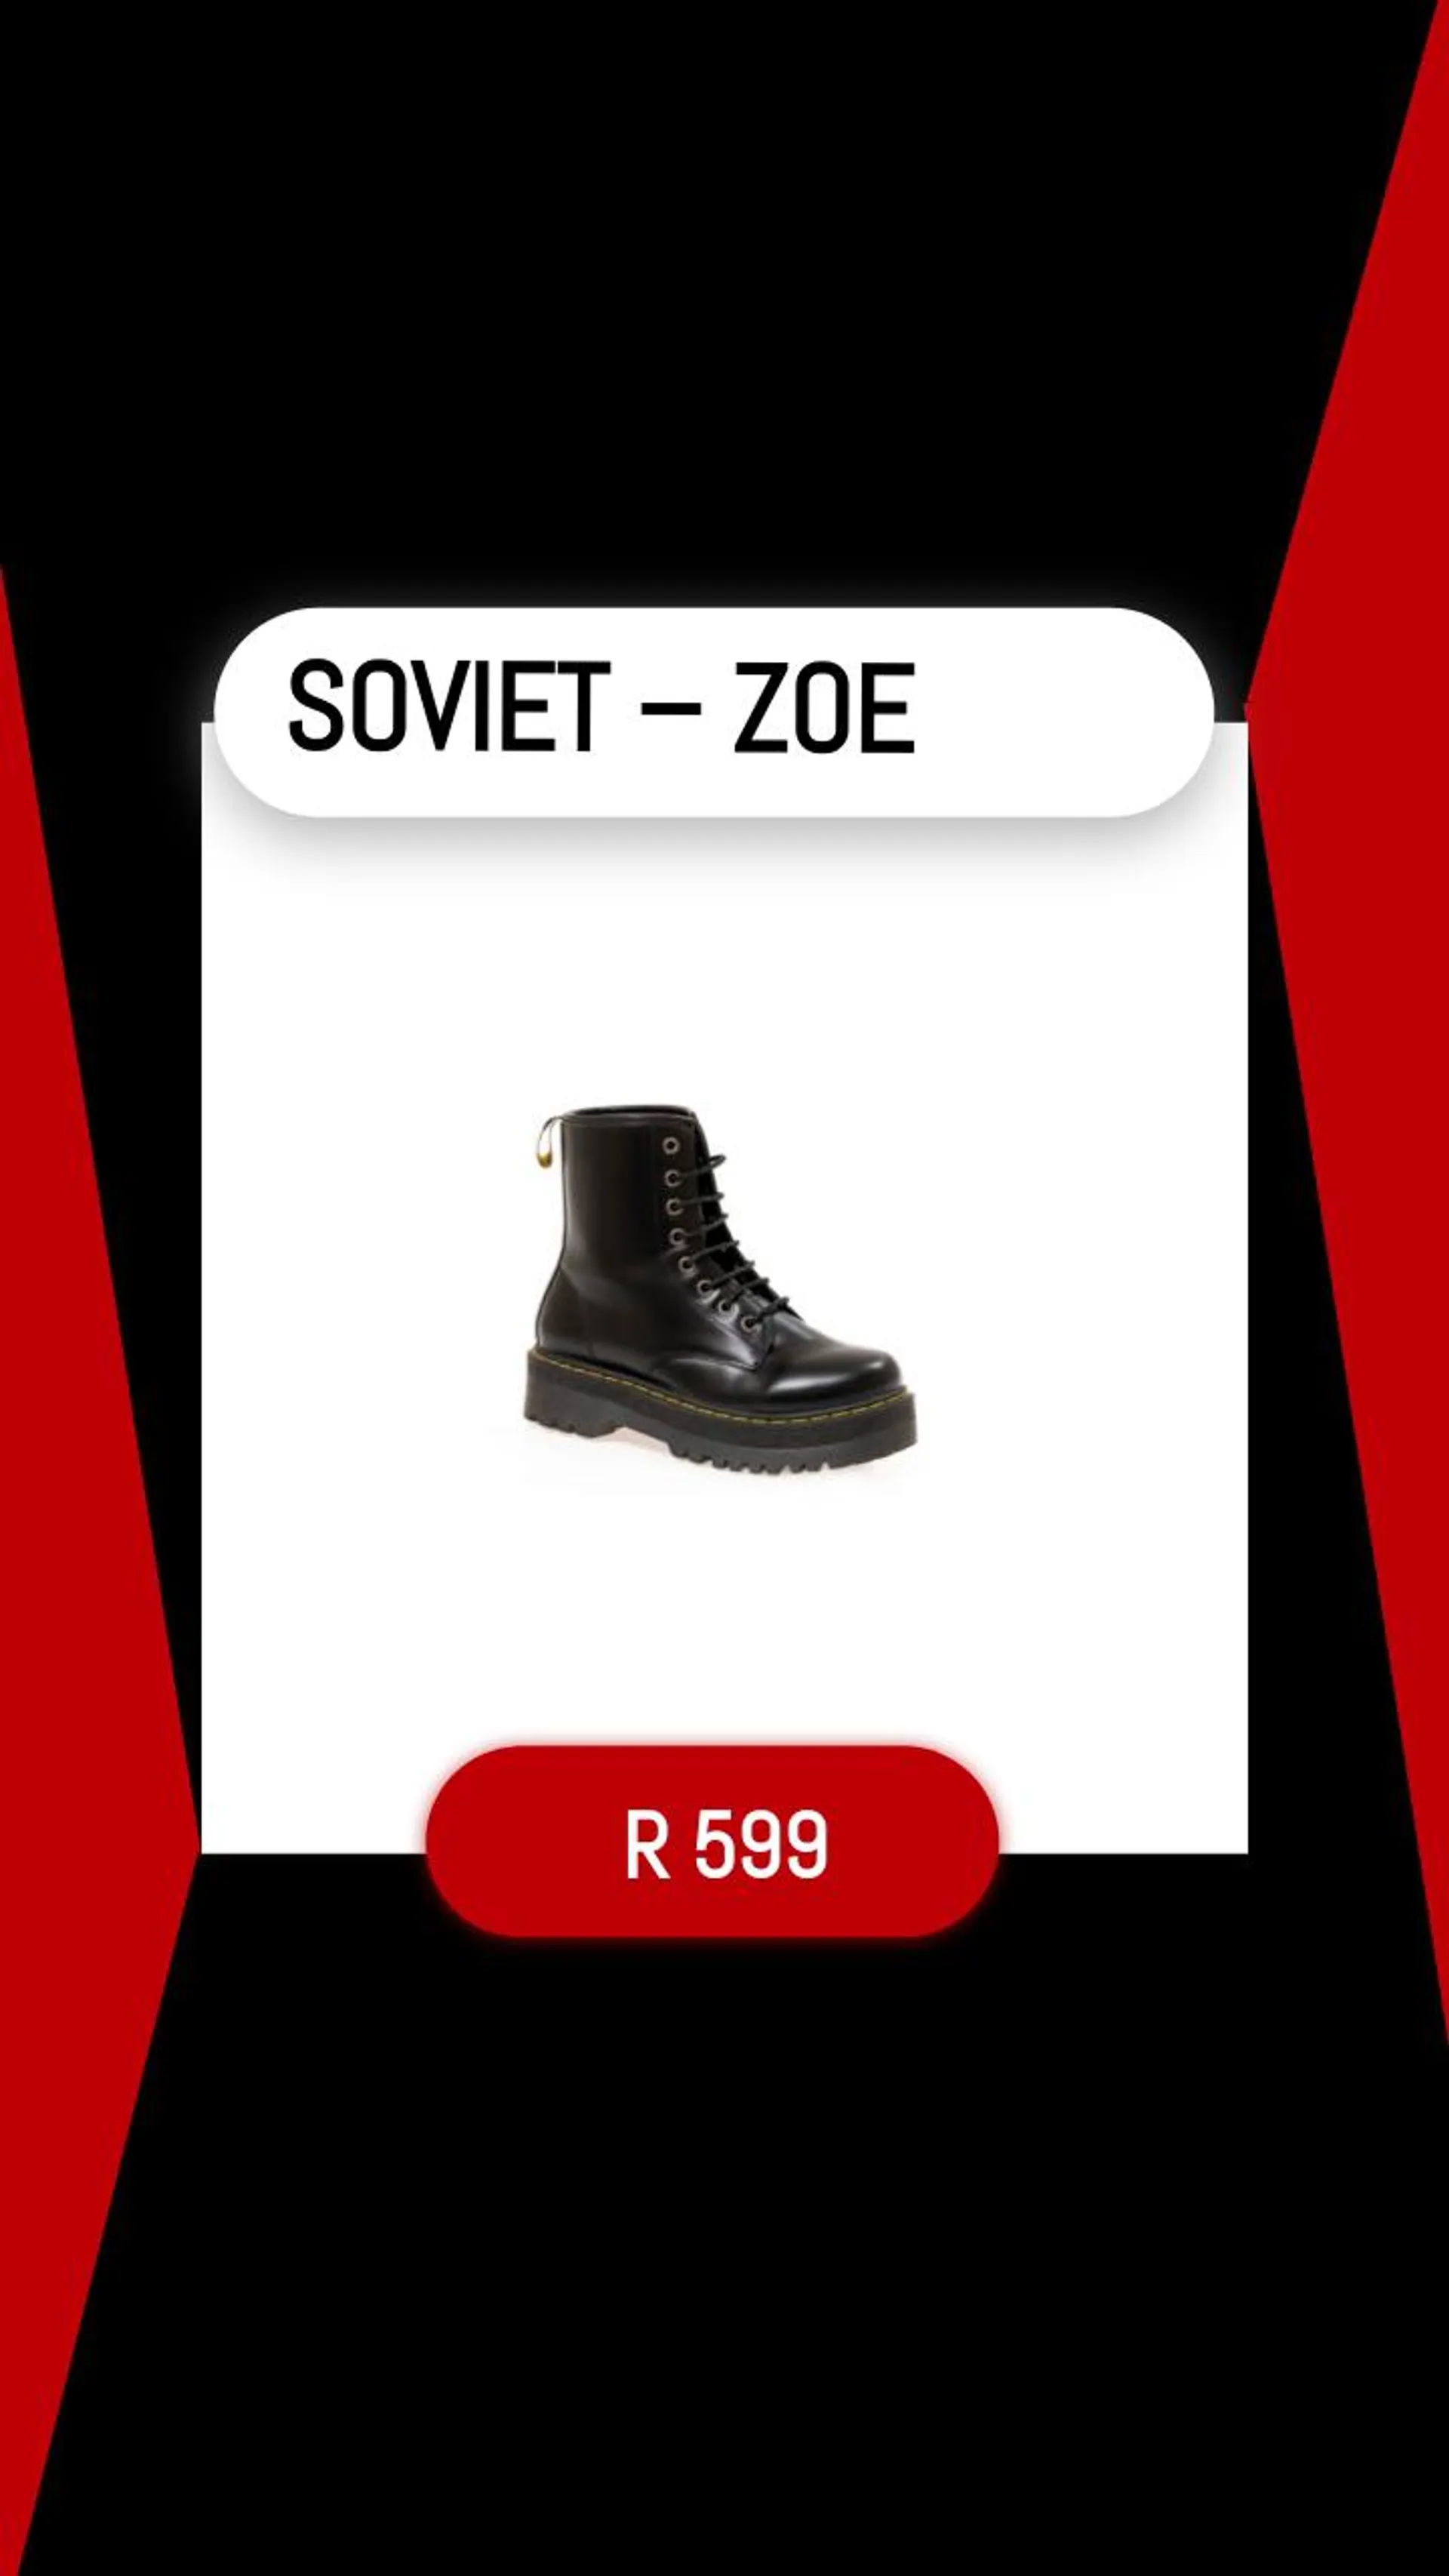 SOVIET – ZOE